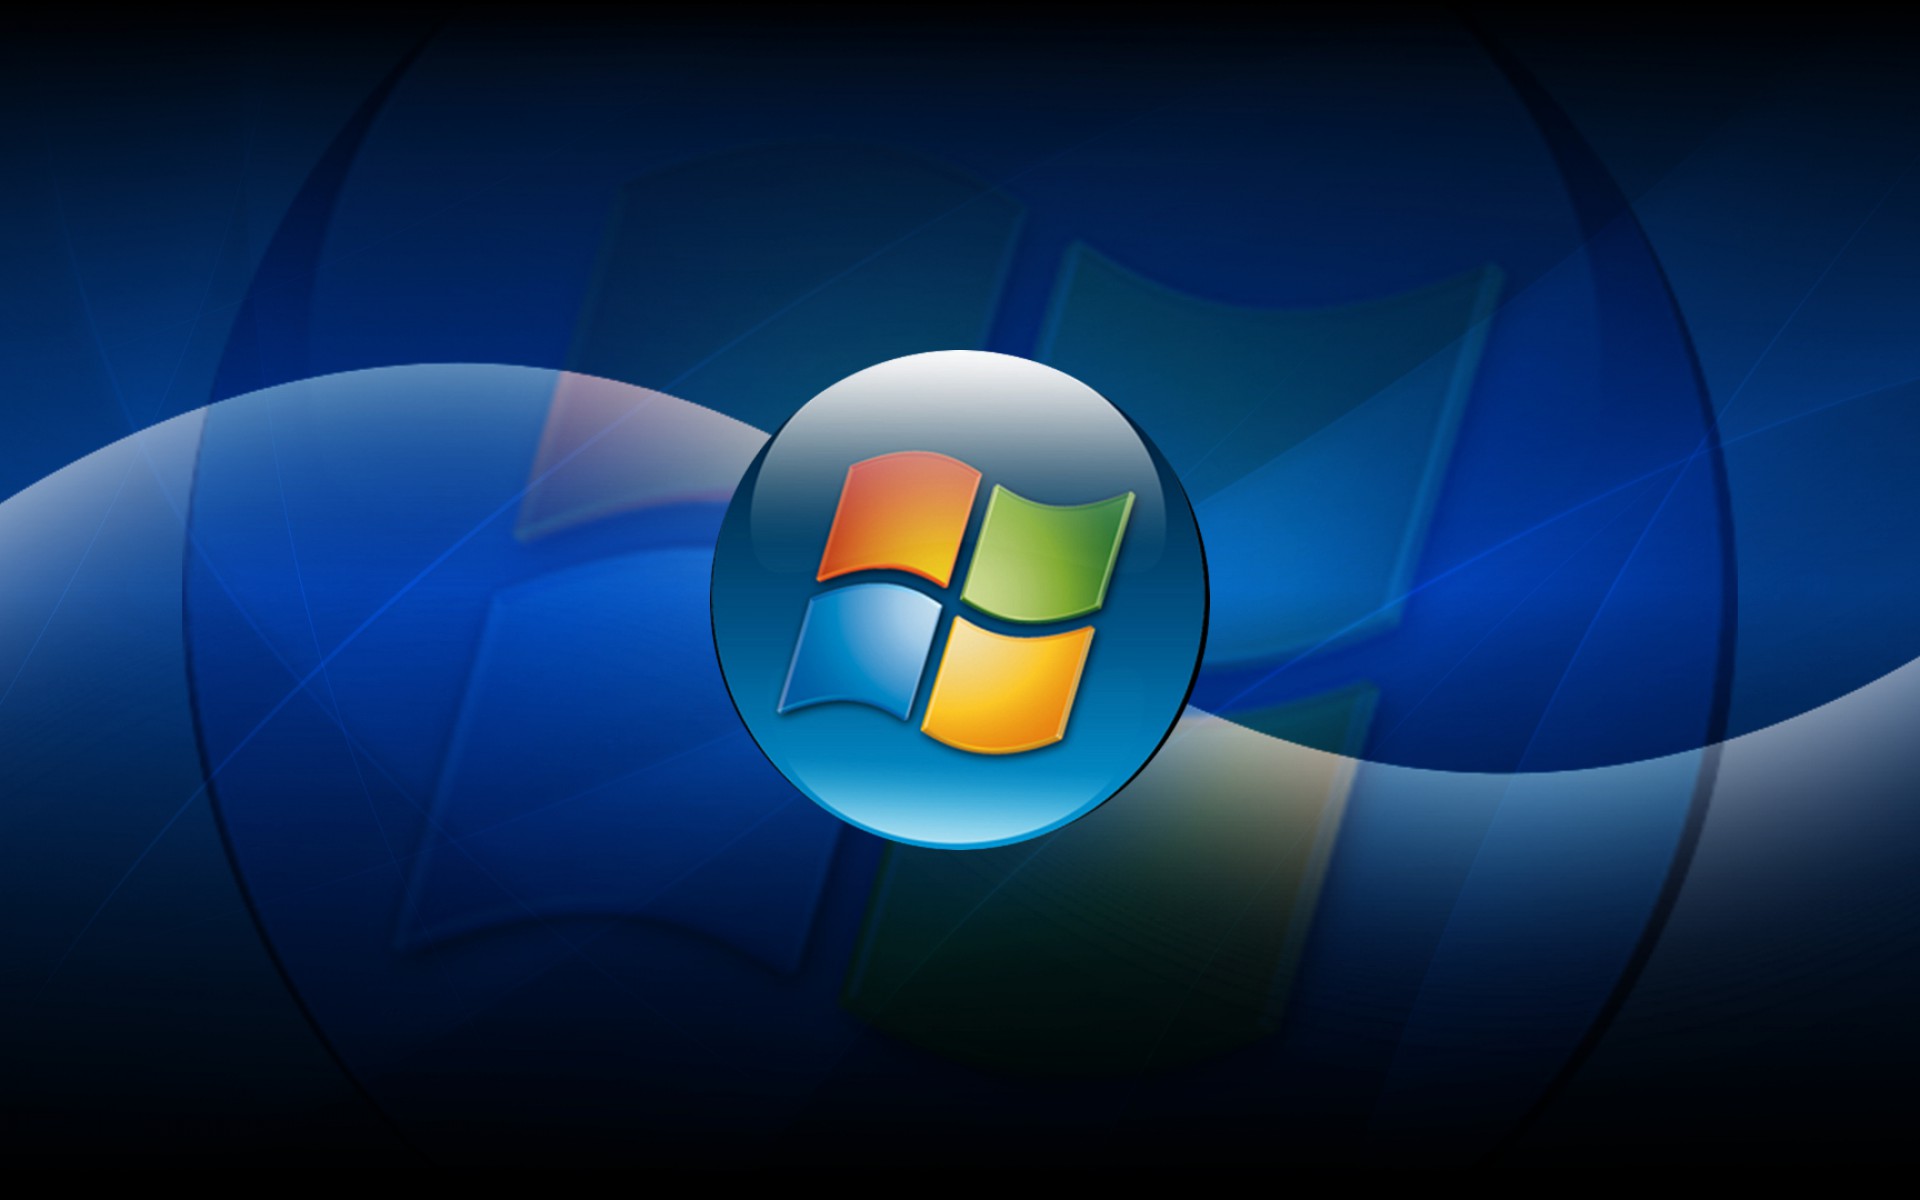 HD Wallpapers for Windows | PixelsTalk.Net Full Hd Wallpapers For Windows 8 1920x1080